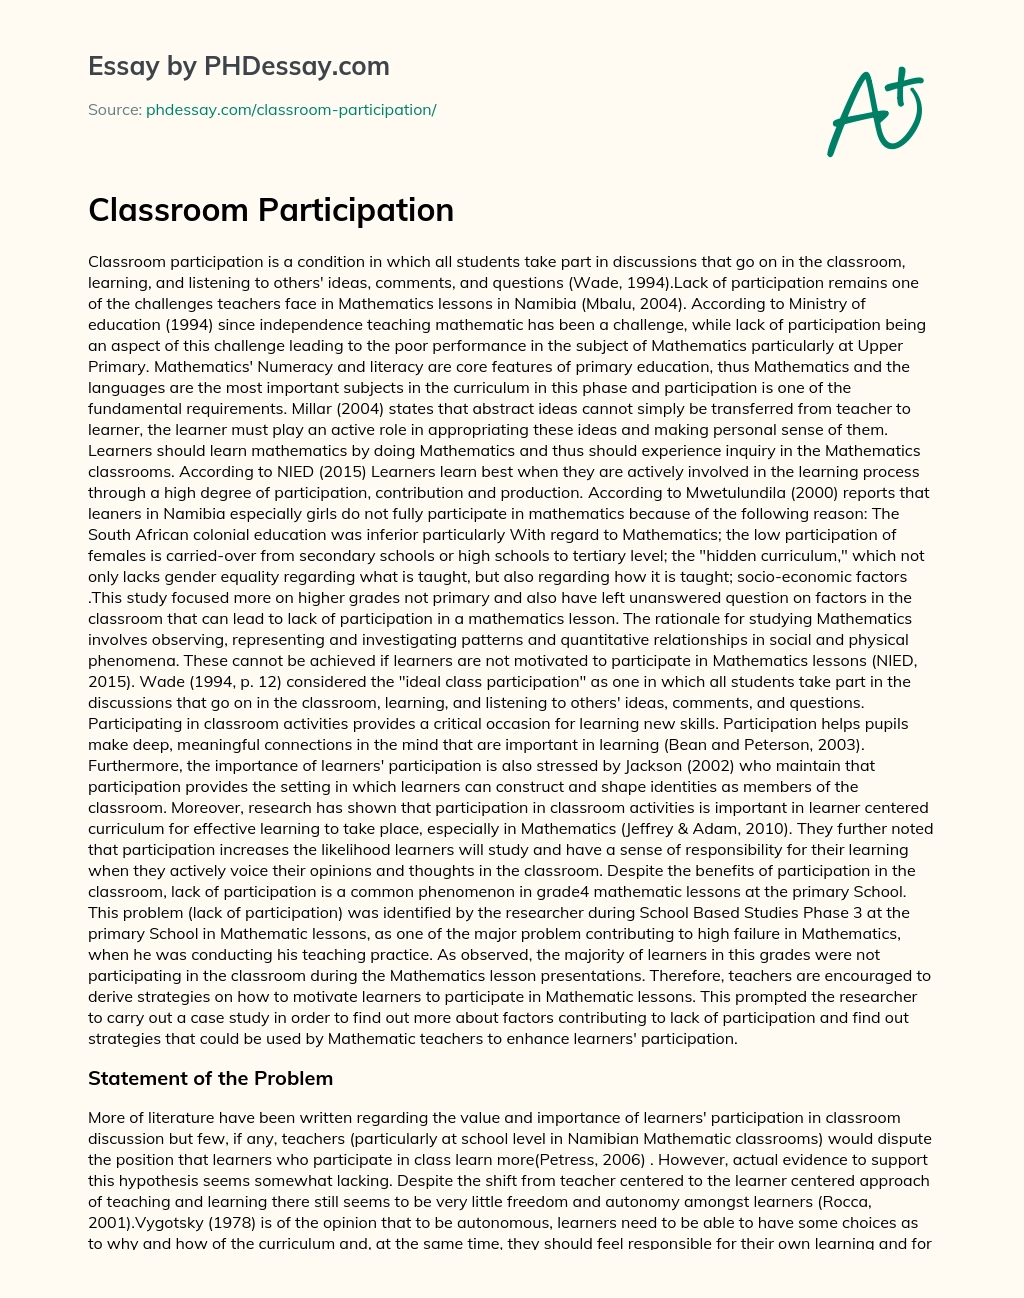 Classroom Participation essay